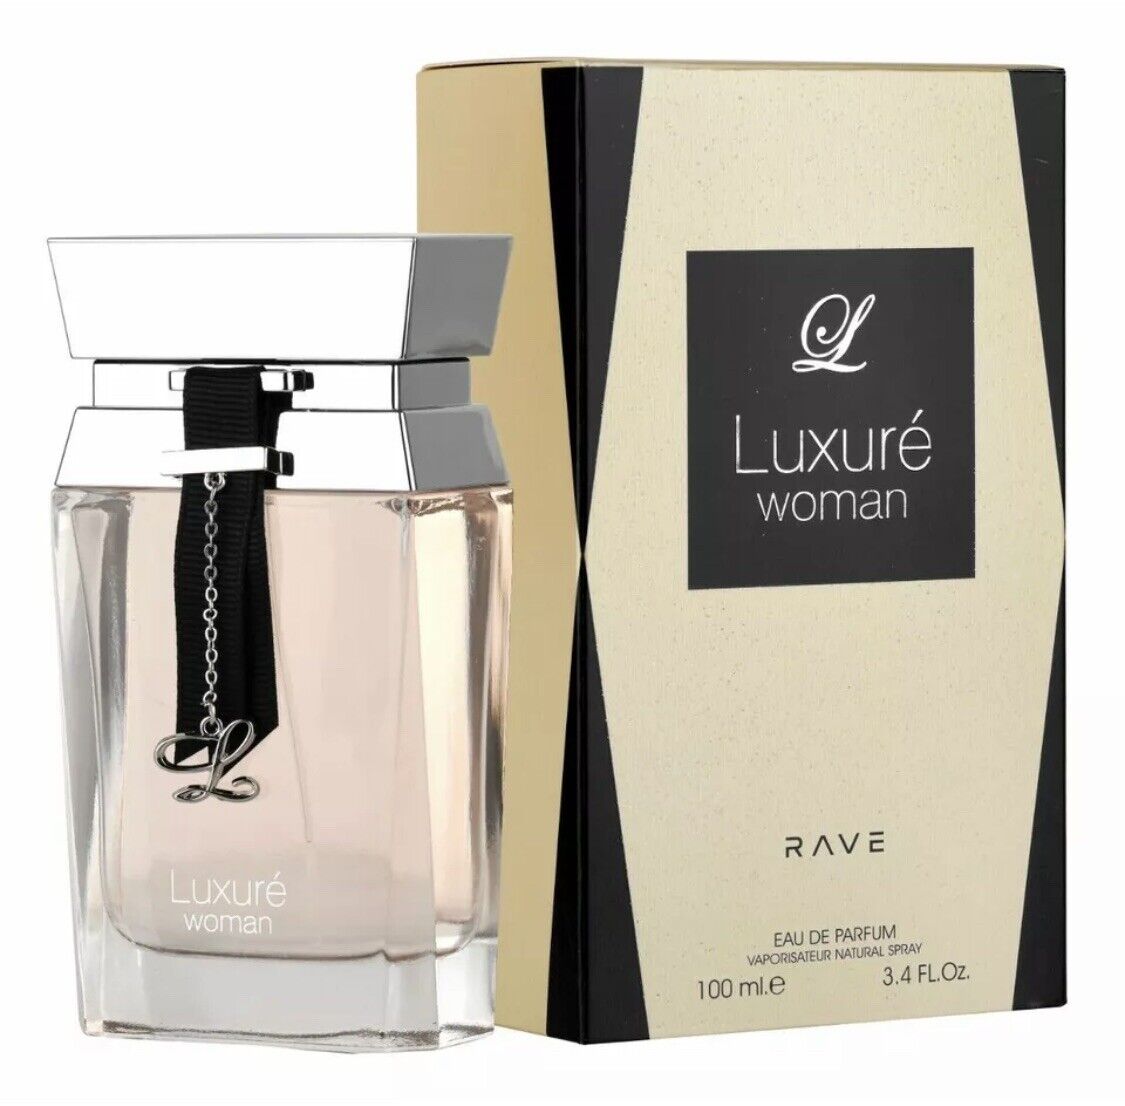 Luxure Woman EDP 100ML (3.4Oz) RAVE by Lattafa Perfumes - Intense oud